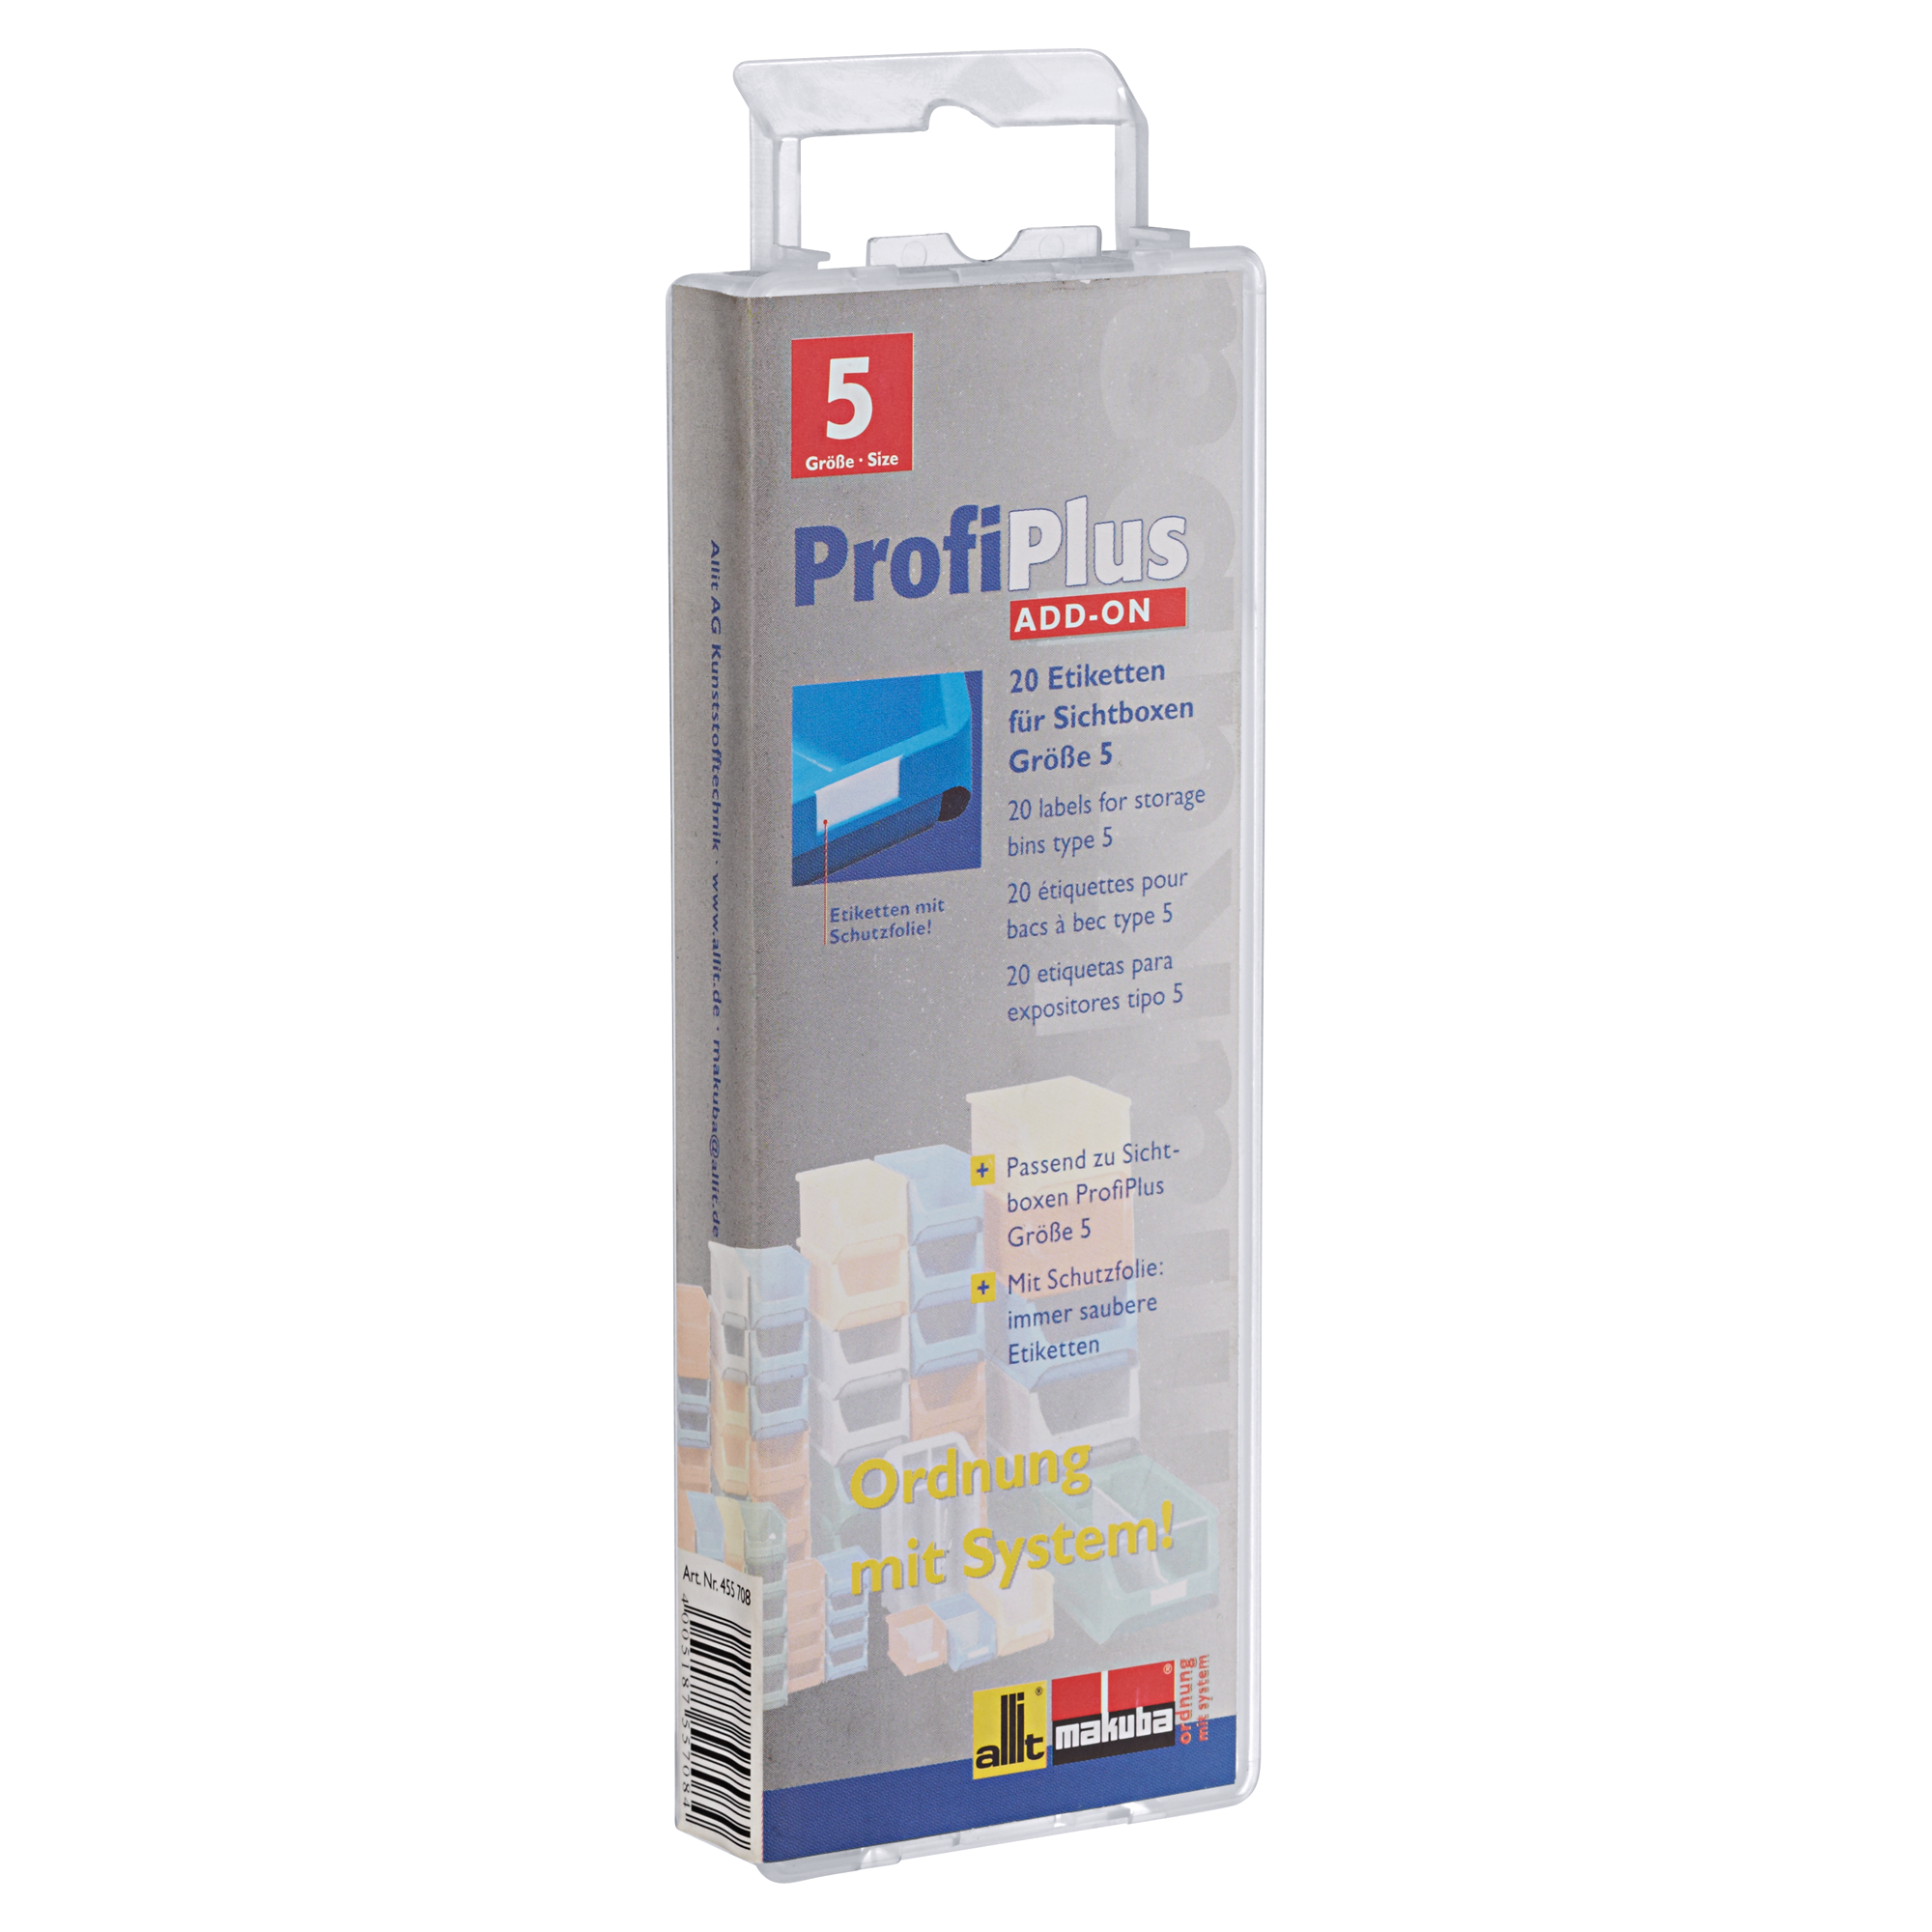 ProfiPlus Etiketten + Folienscheiben 'Box 5 Label' 20 Stück + product picture